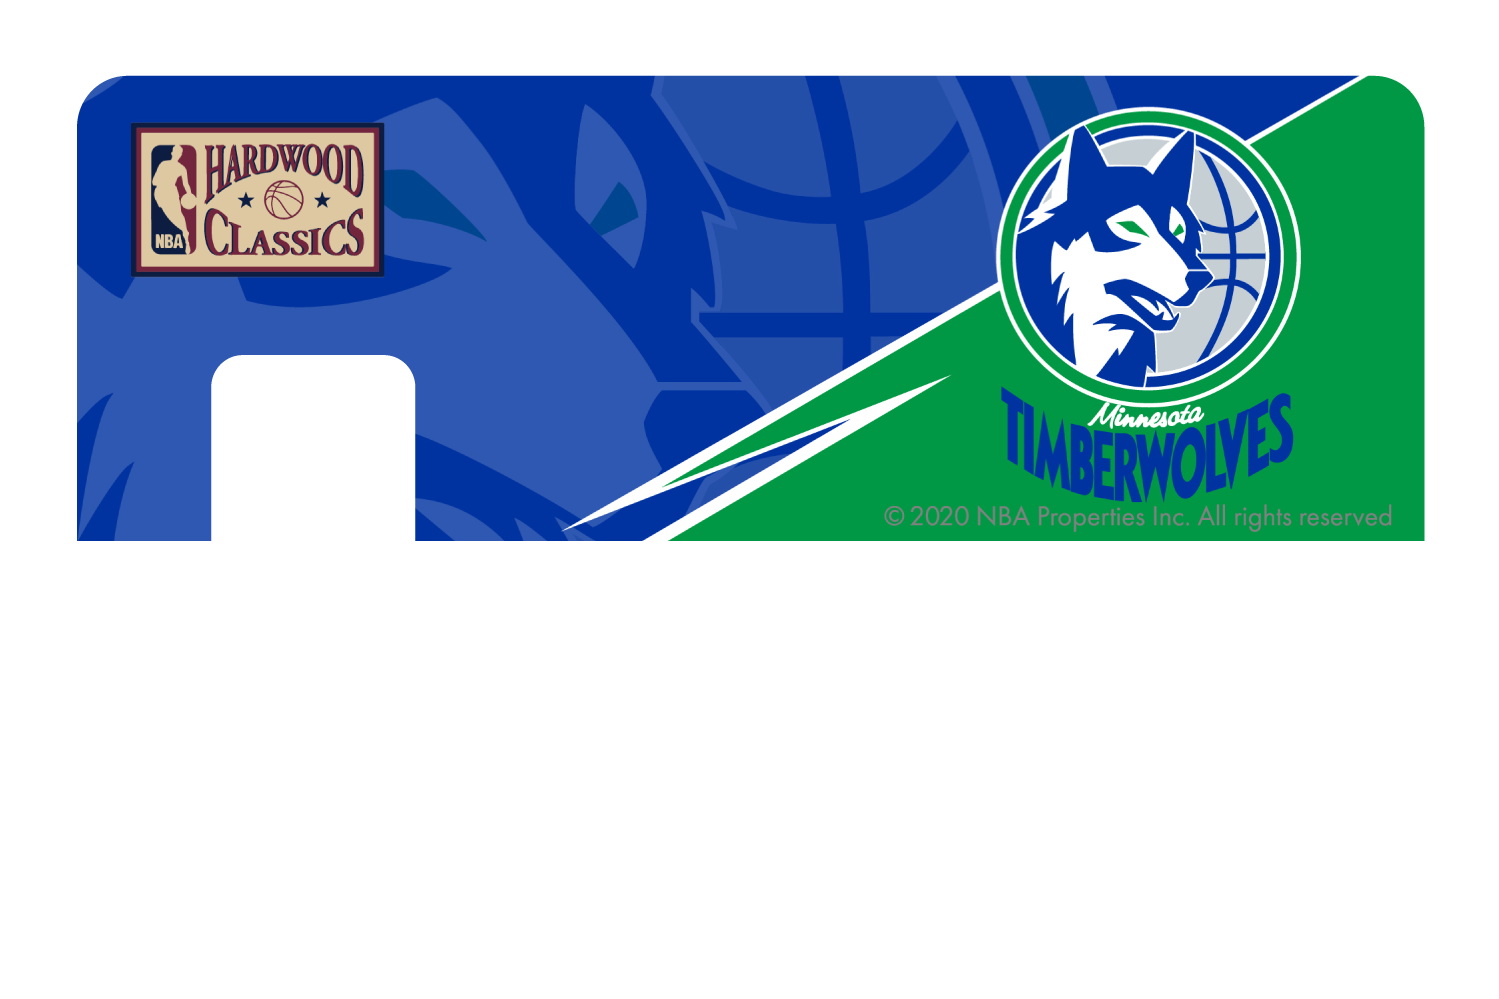 Minnesota Timberwolves: Uptempo Hardwood Classics